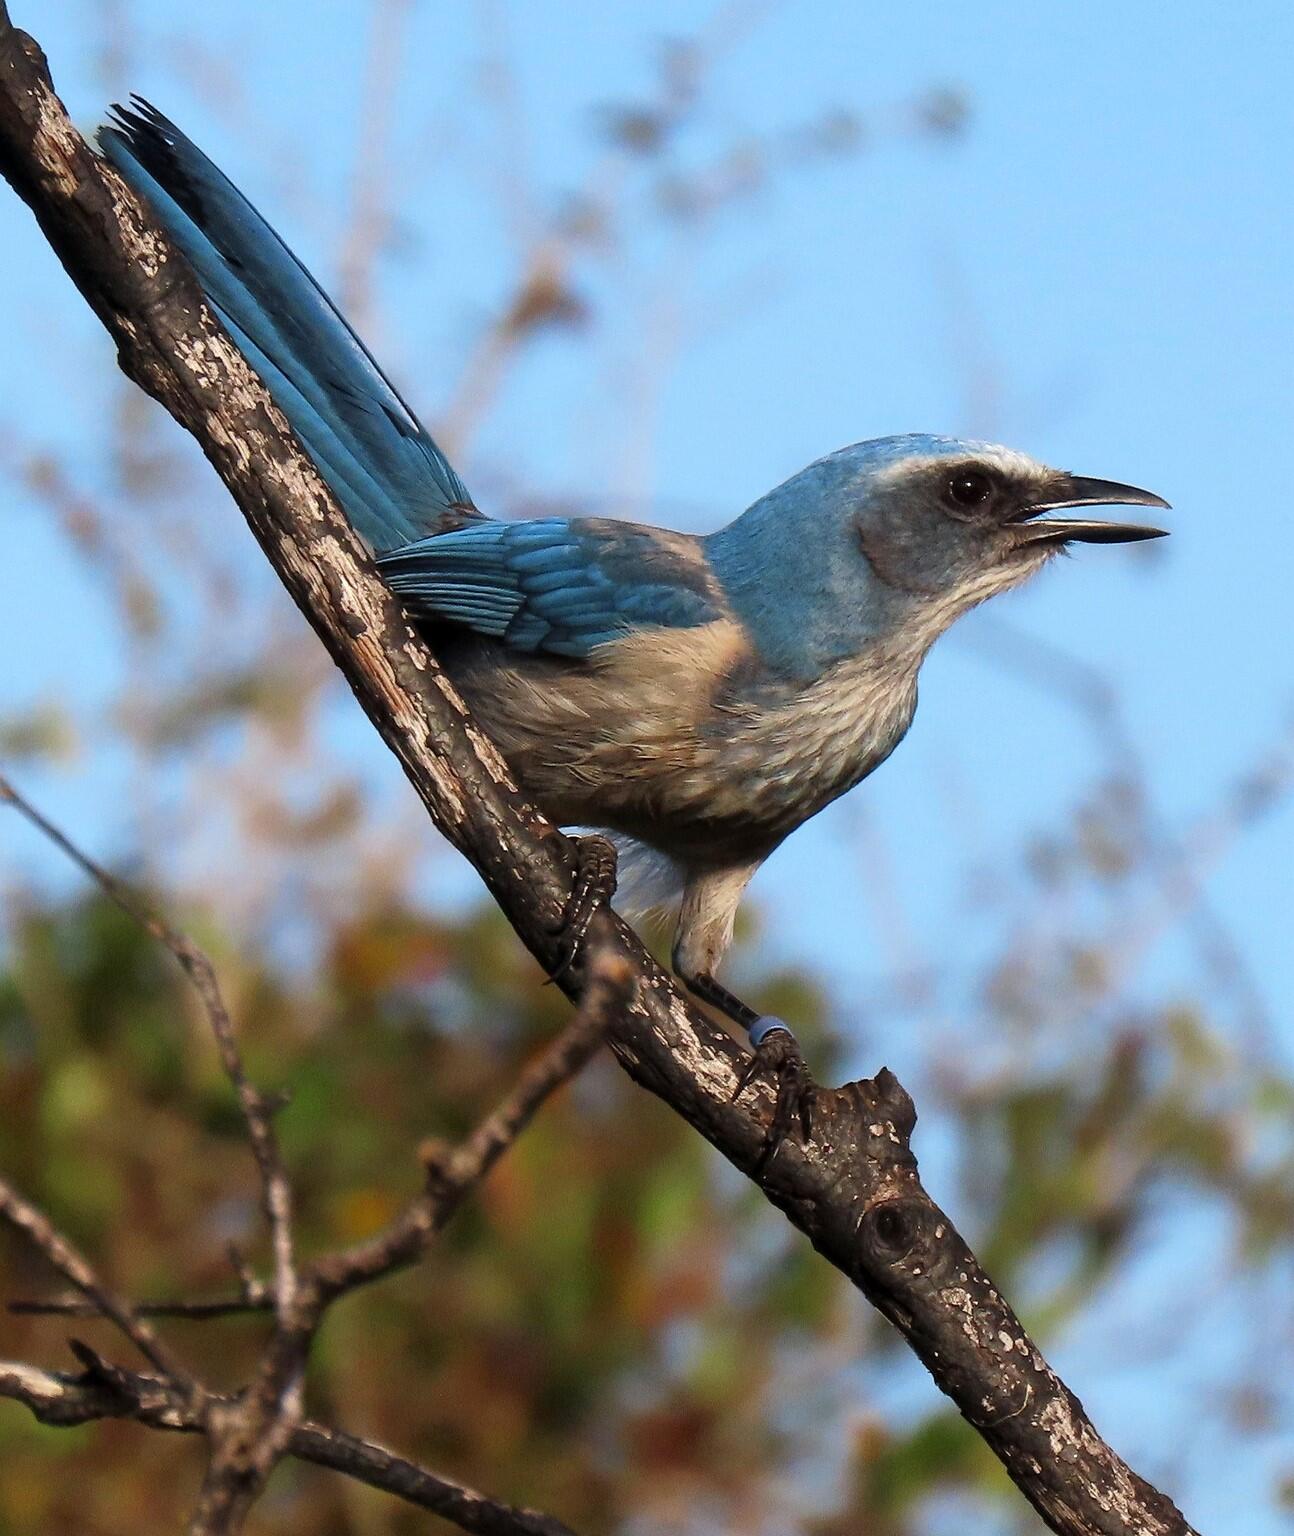 A Florida Scrub-Jay perches on a branch that runs diagonally through the frame. Its beak is slightly open.